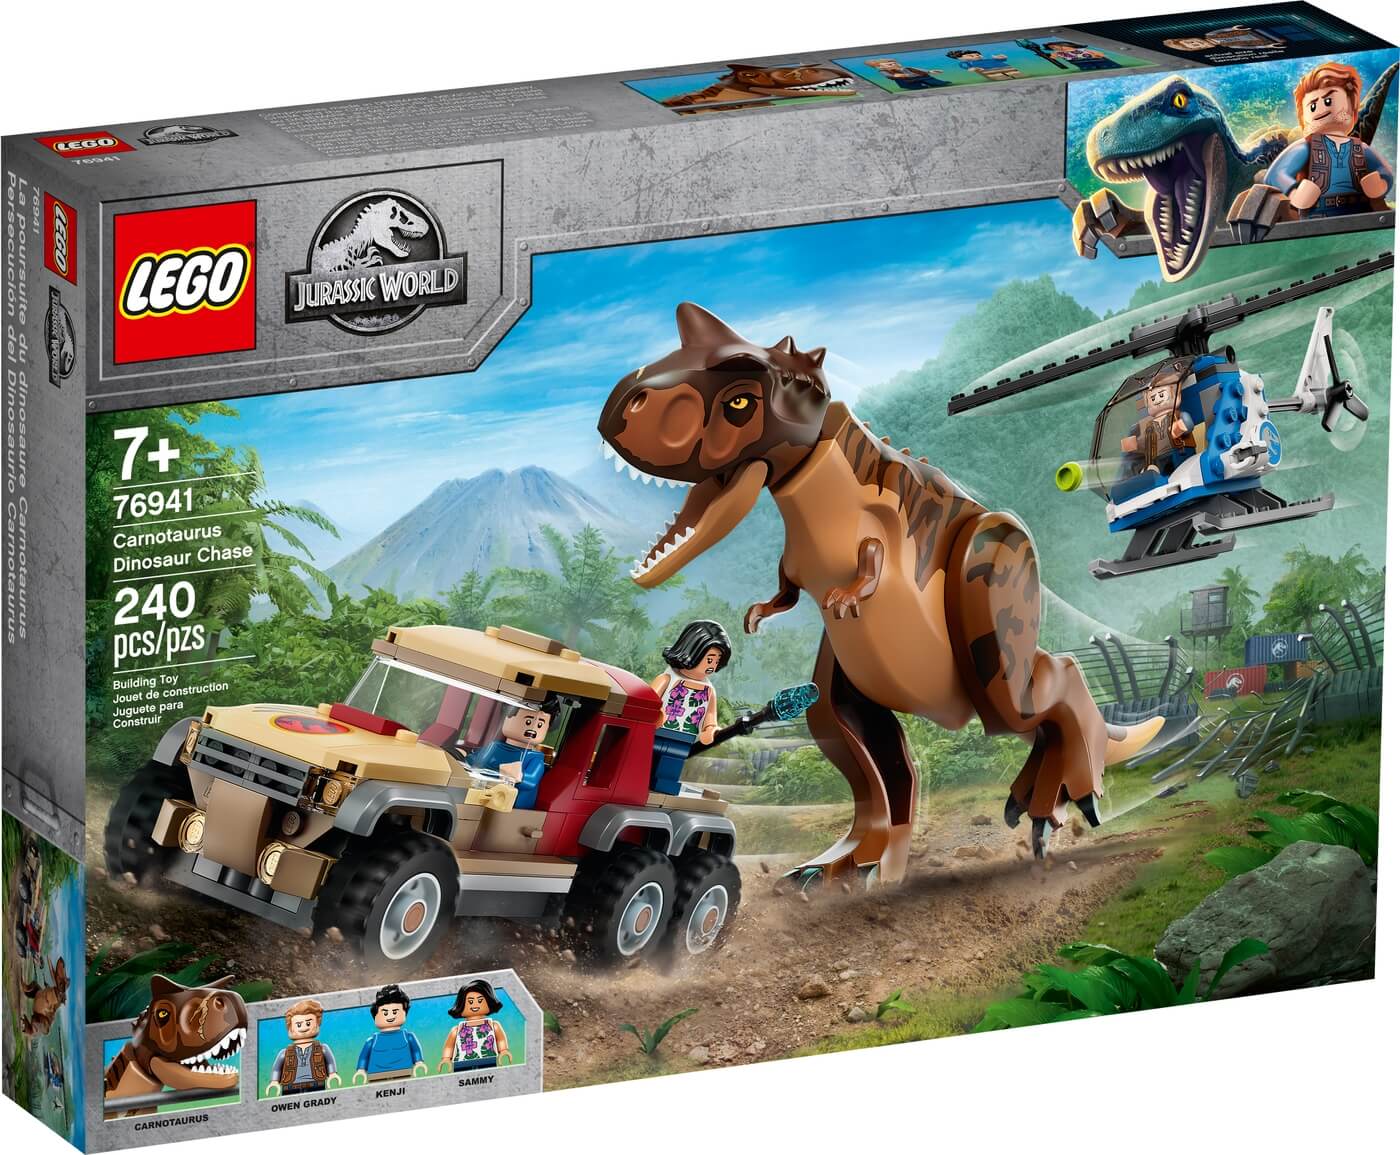 Persecucion del Dinosaurio Carnotaurus ( Lego 76941 ) imagen i